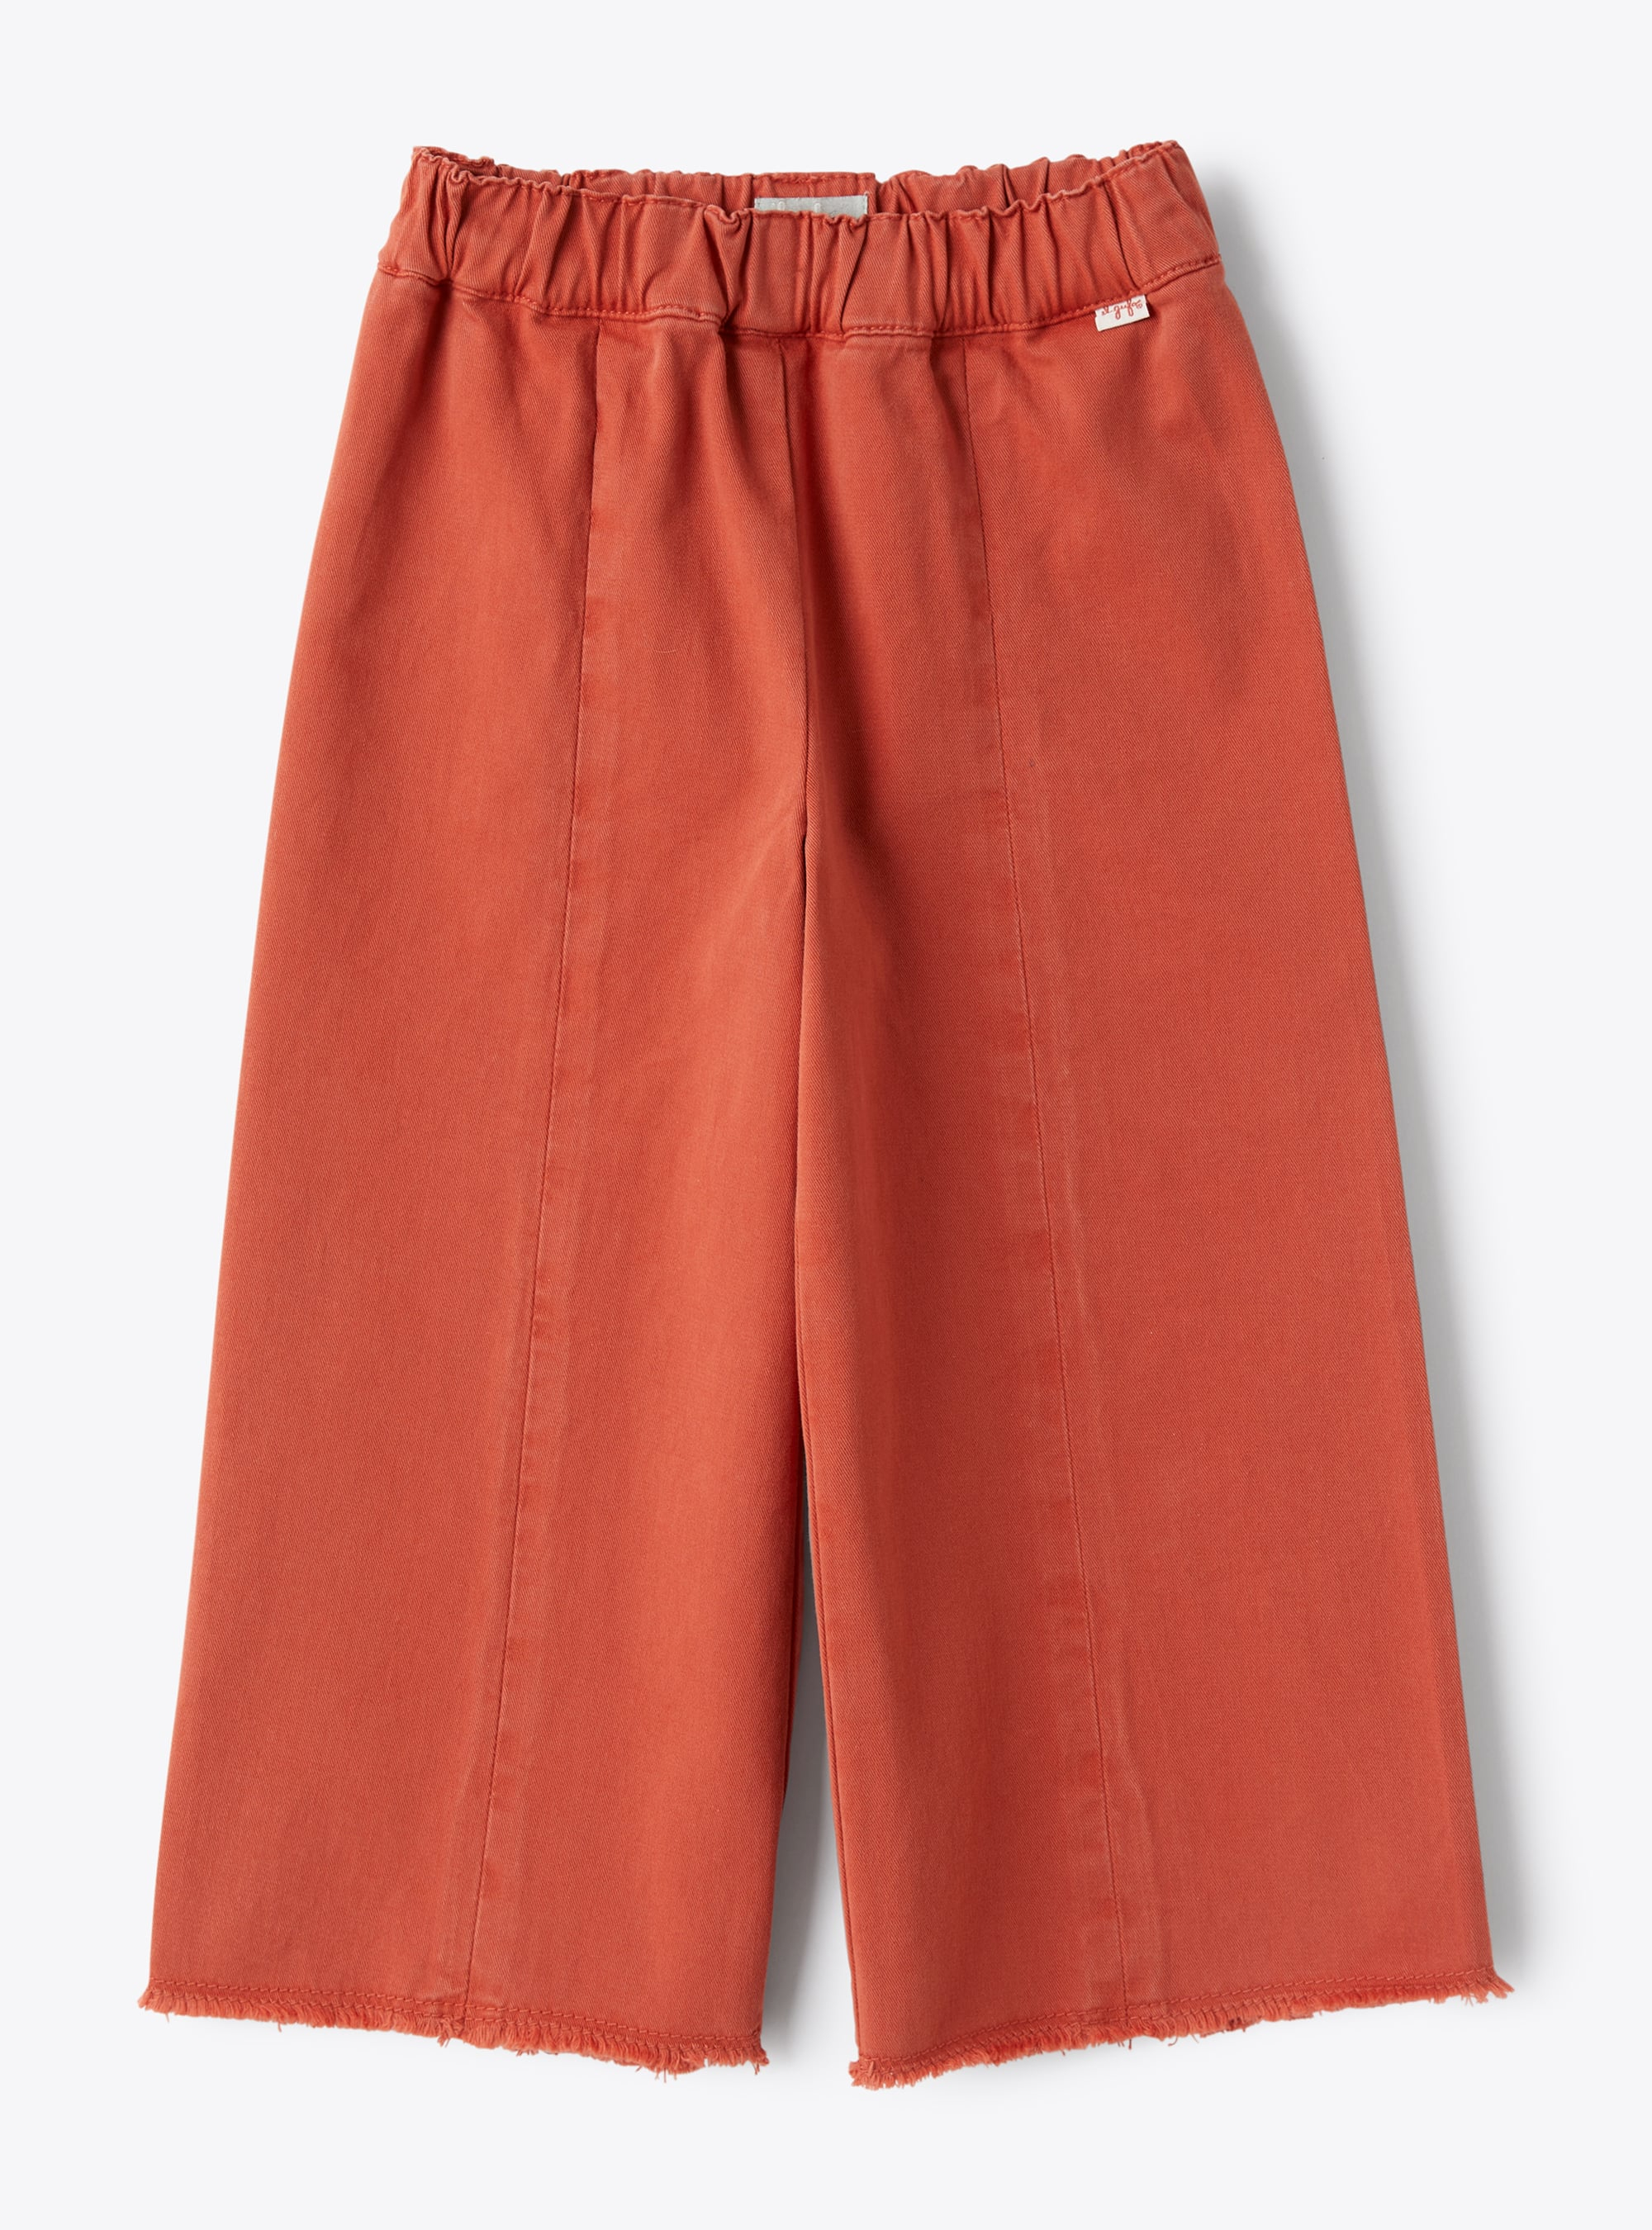 Culotte trousers in brick-red gabardine - Trousers - Il Gufo